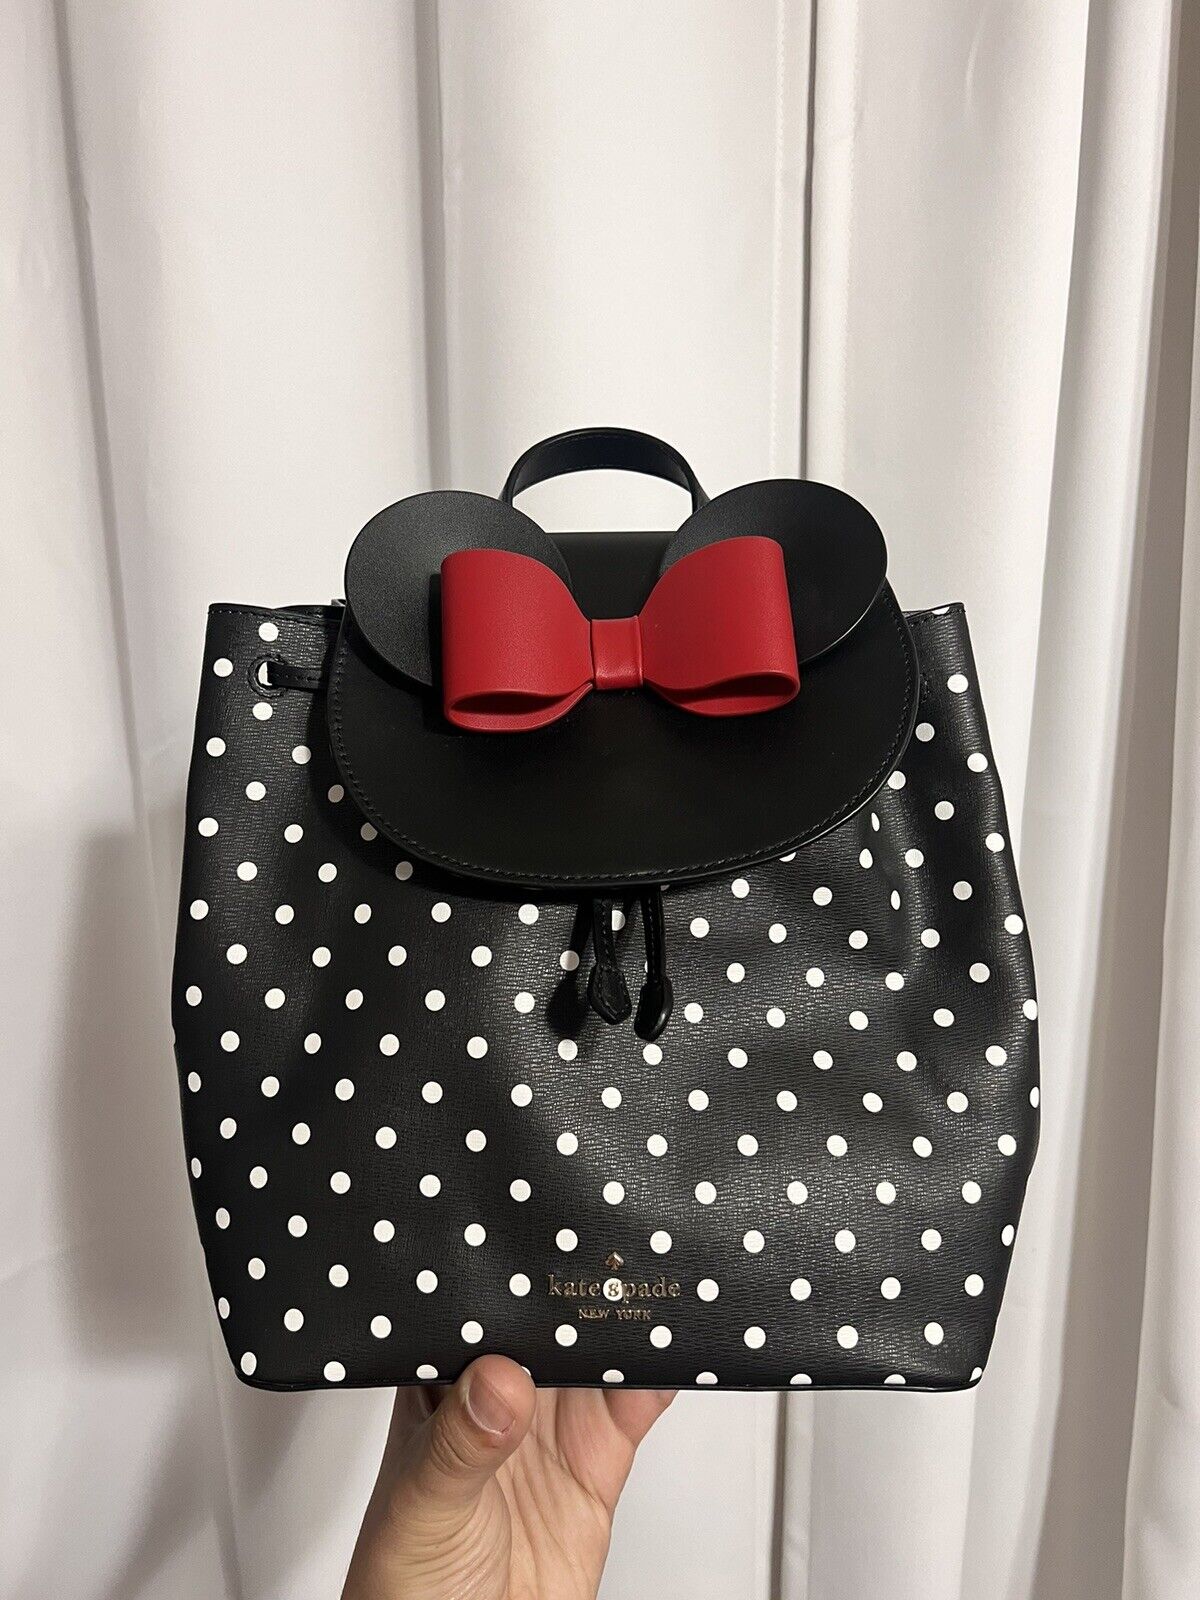 Kate Spade Disney Minnie Mouse Bag Backpack Disney Parks